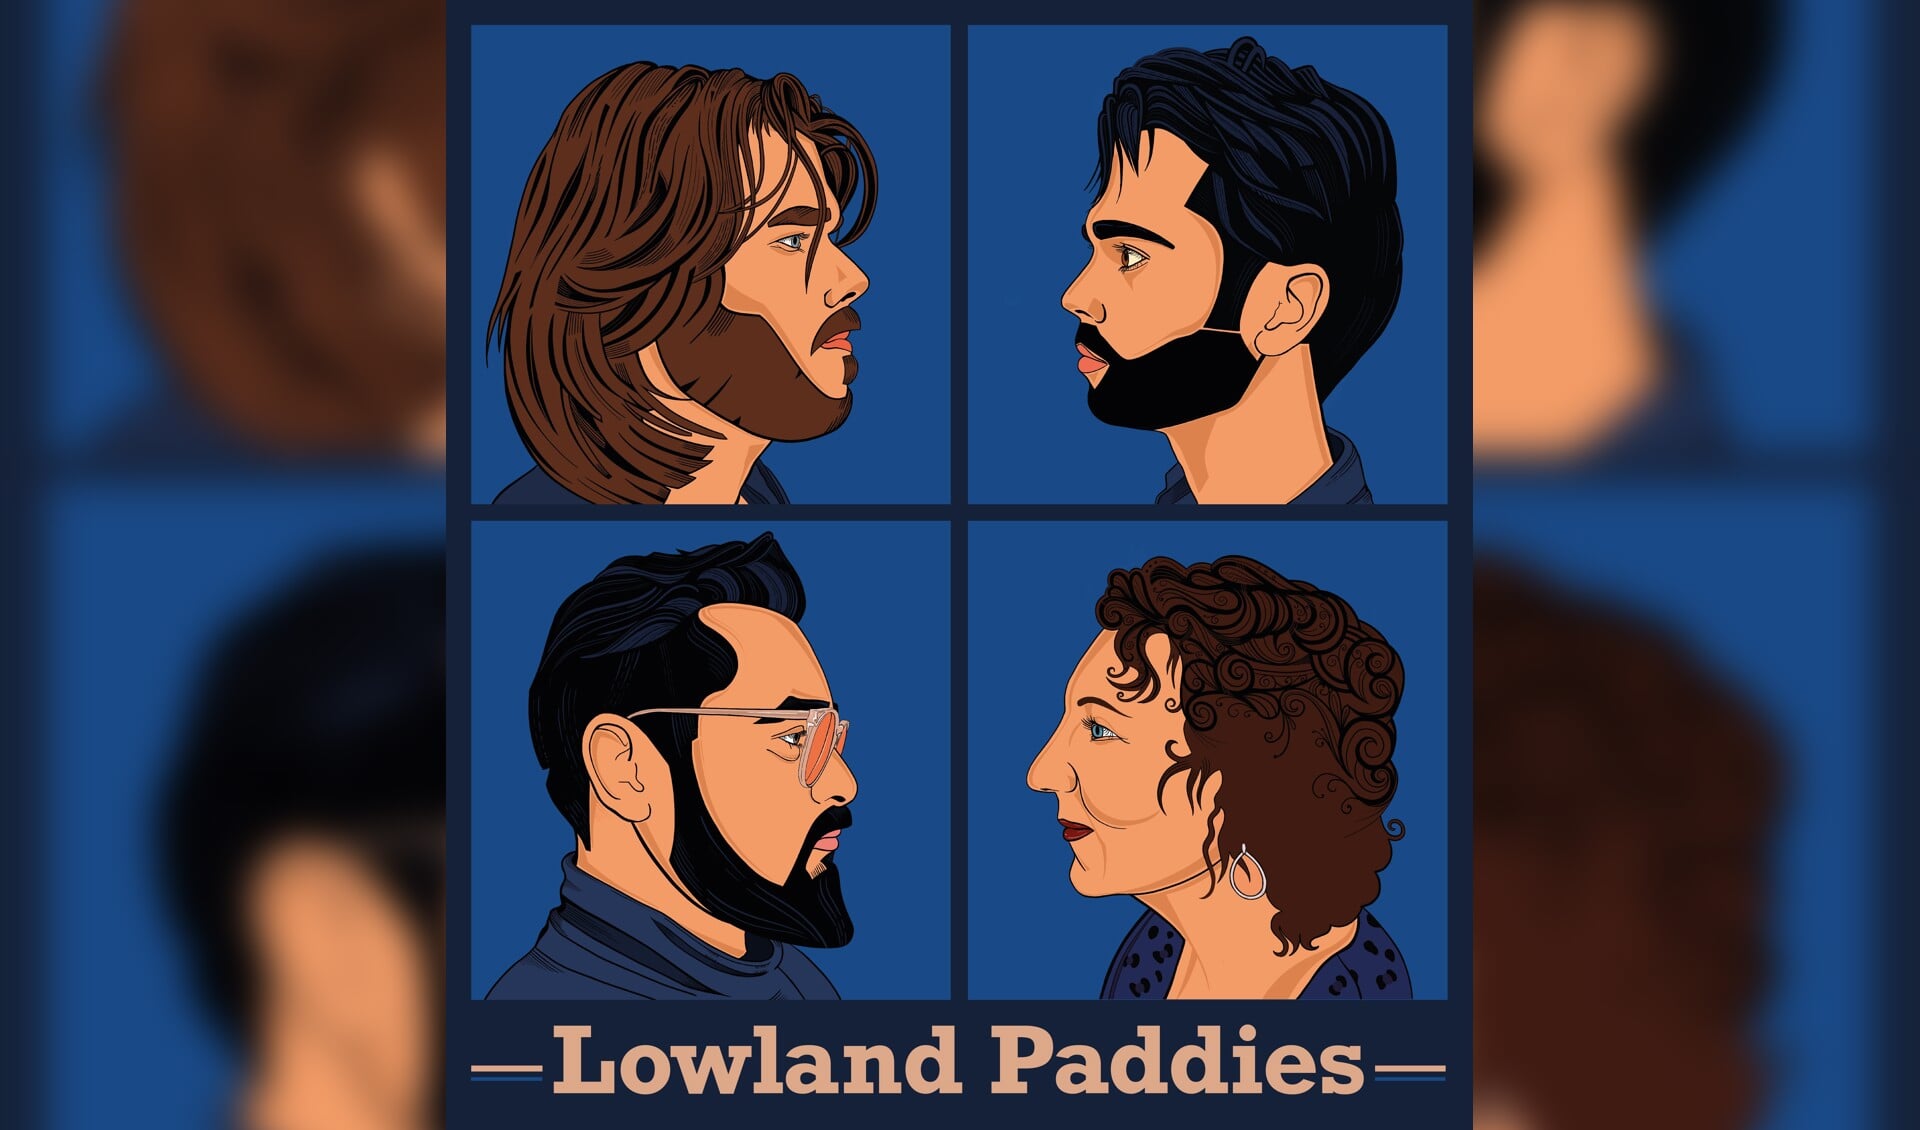 The Lowland Paddies